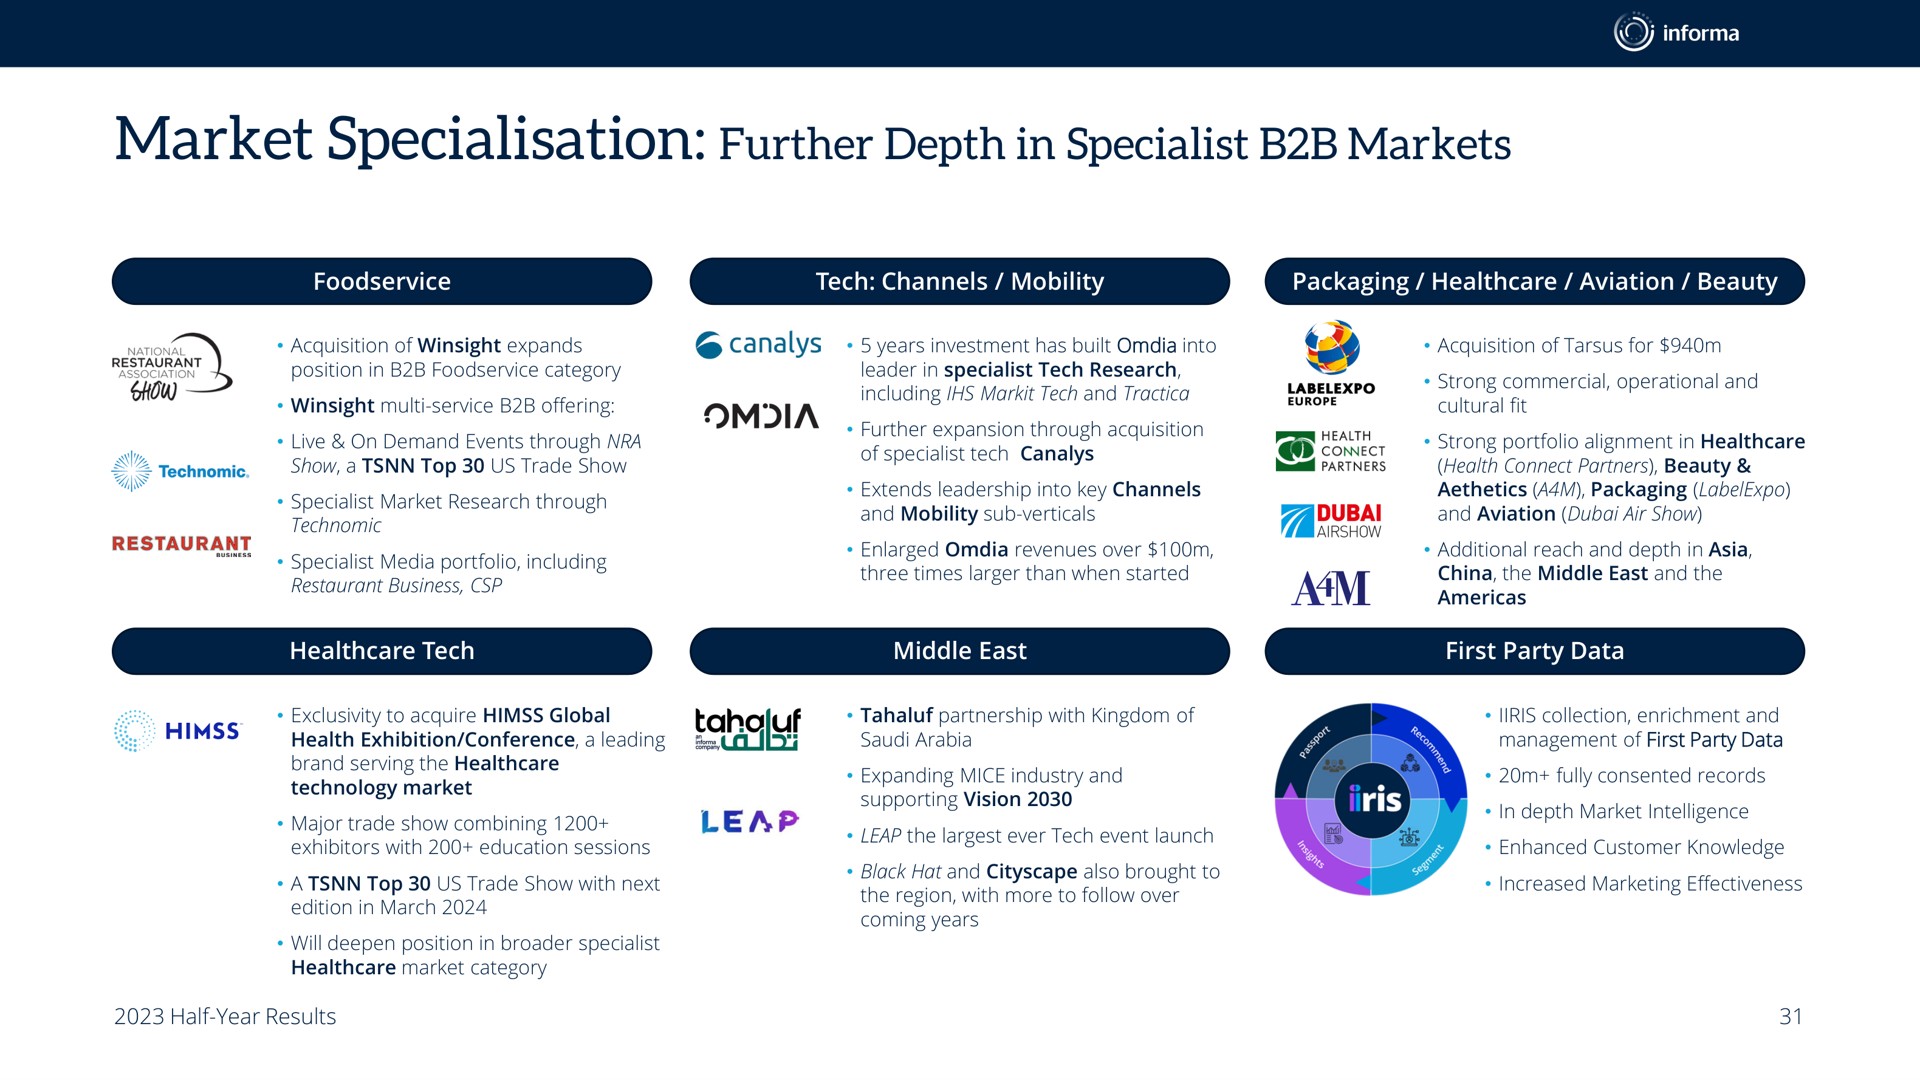 market further depth in specialist markets | Informa